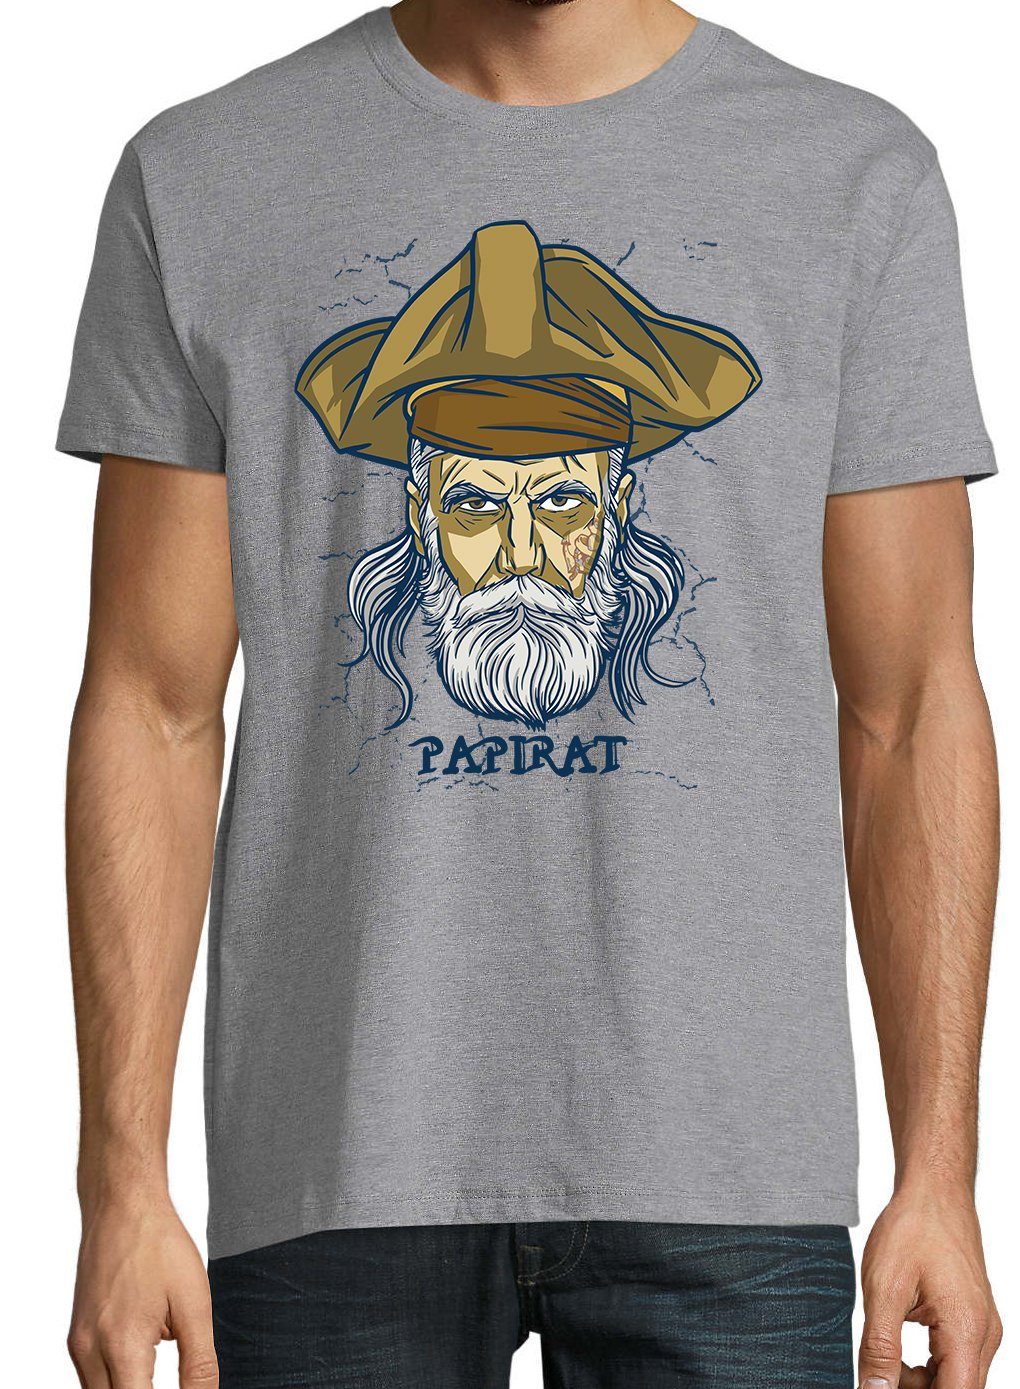 T-Shirt Frontprint mit Papa Piraten Youth Grau Designz trendigem Shirt Herren Papirat